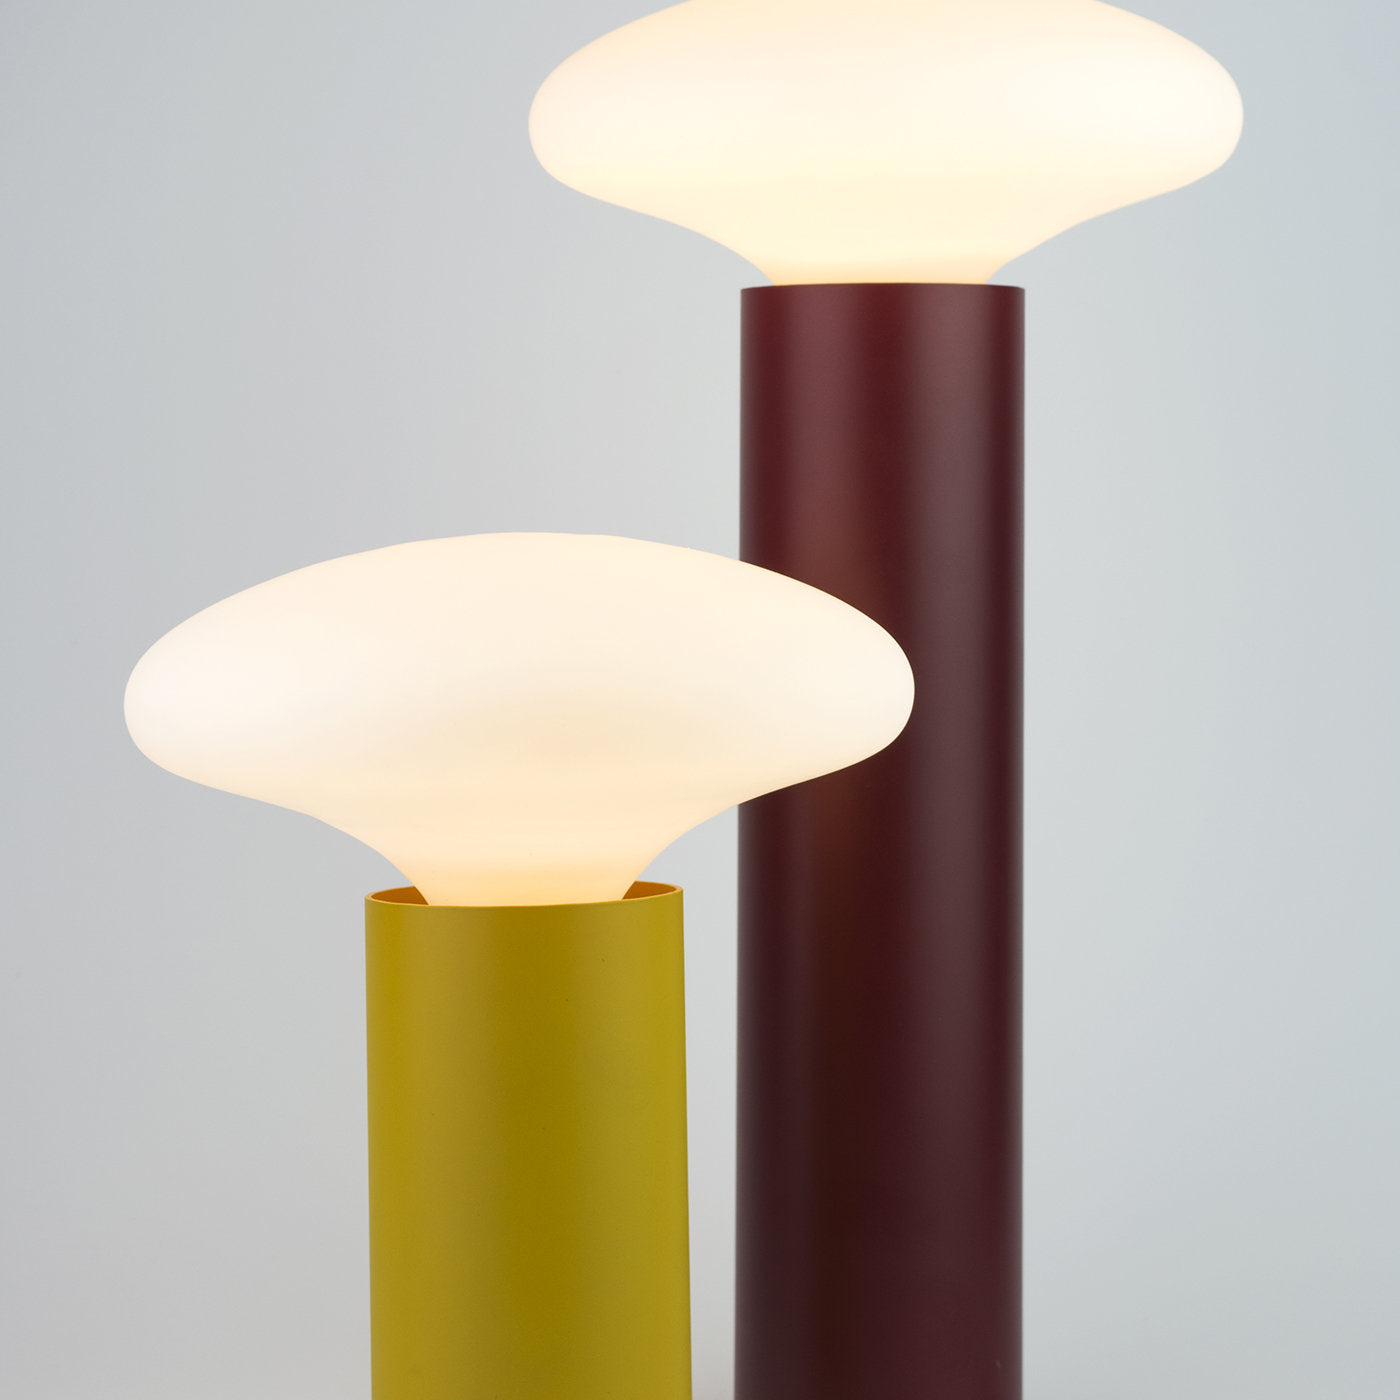 Stem Table Lamp by Alalda Design - Alternative view 4